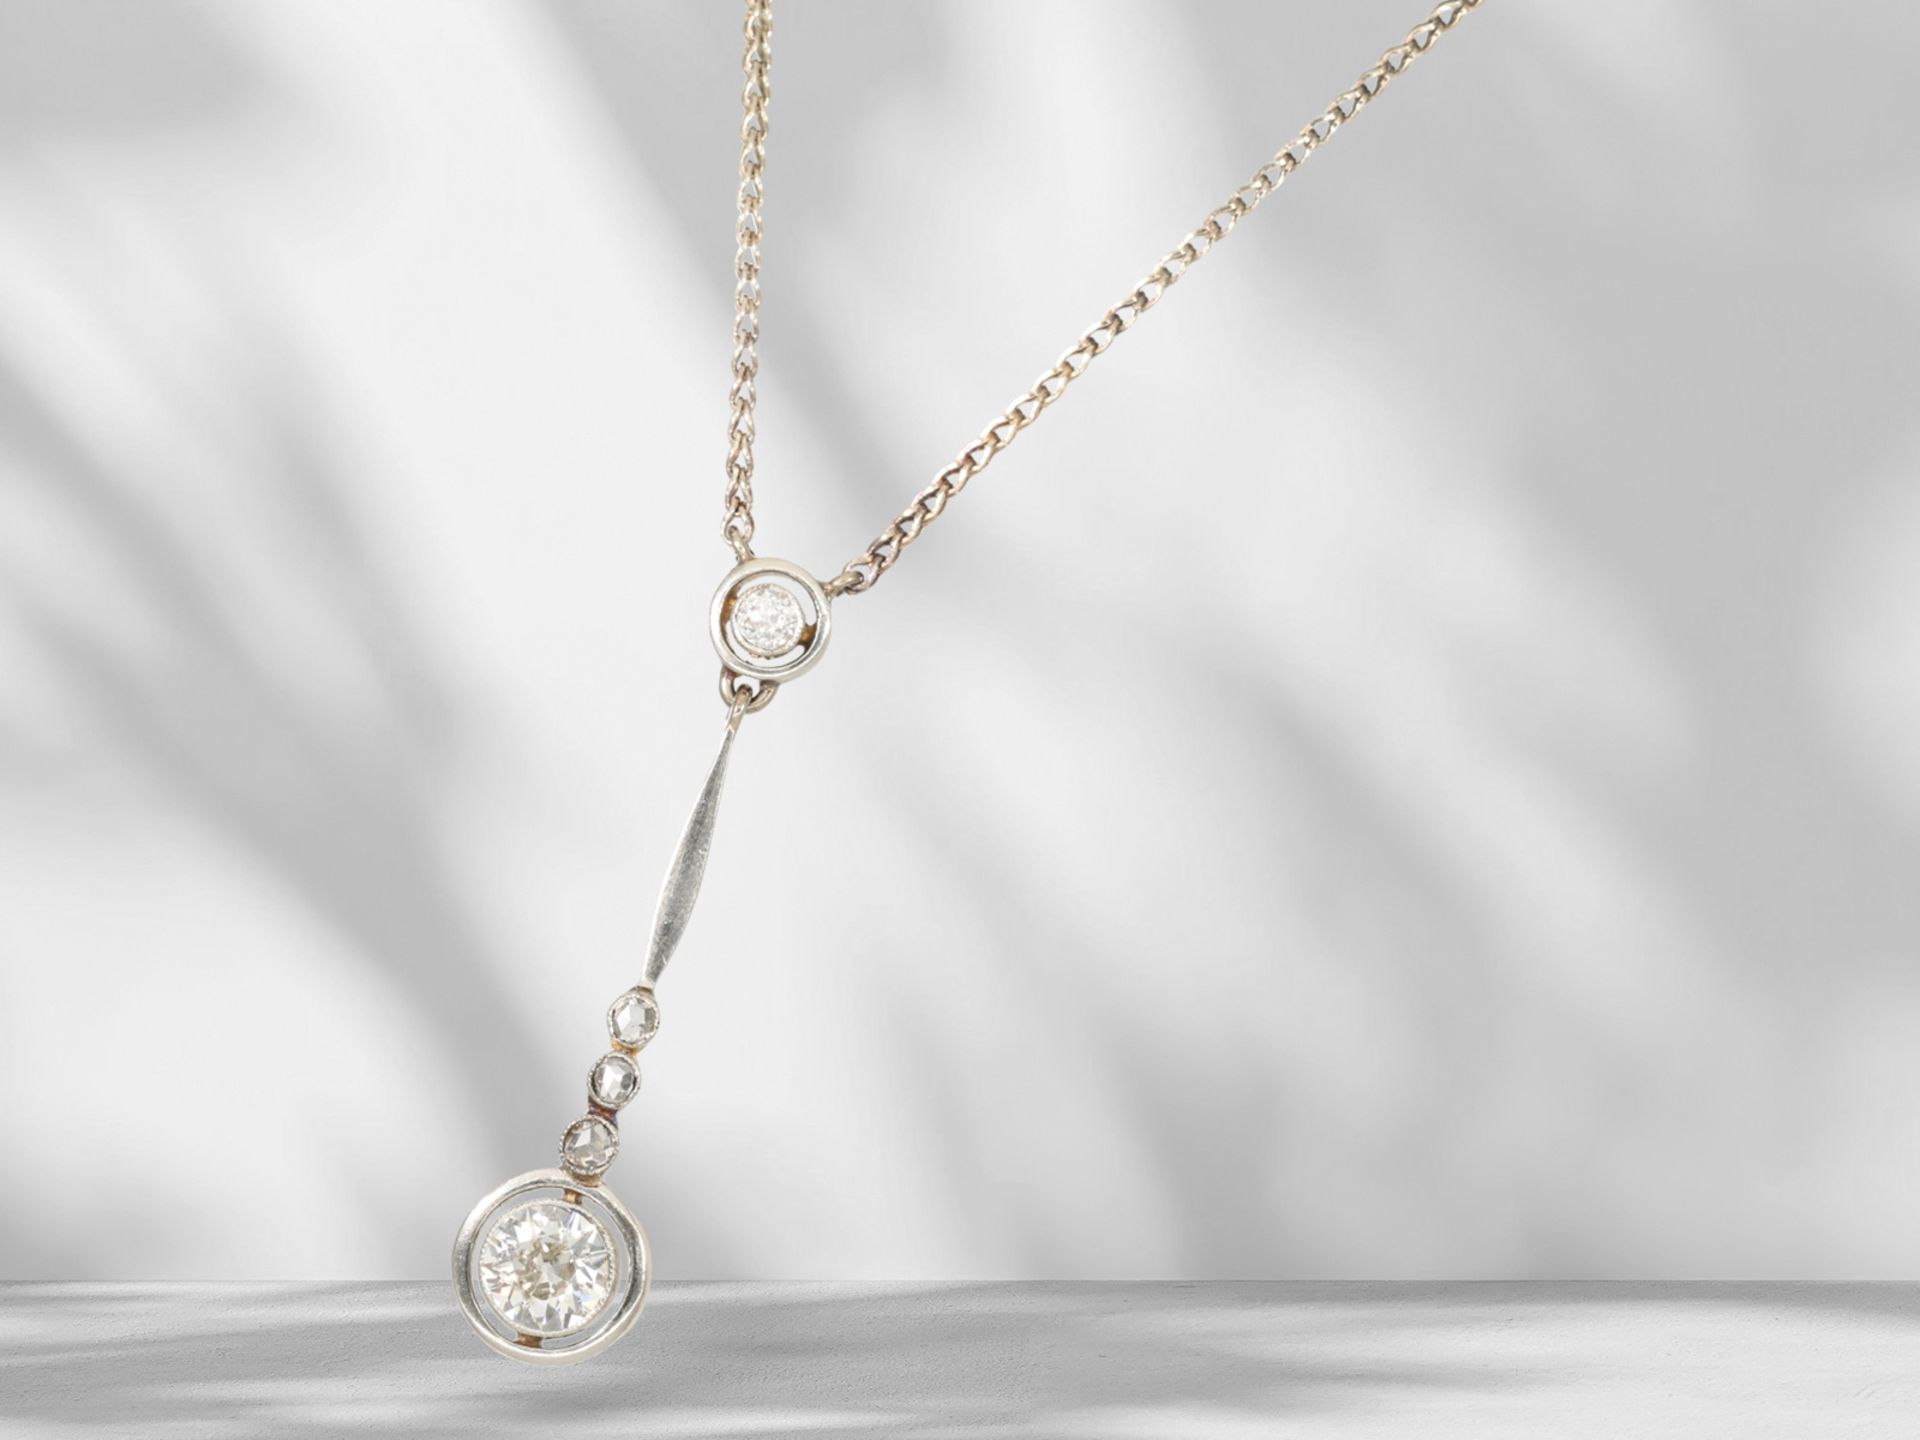 Chain: filigree antique diamond necklace, possibly around 1920